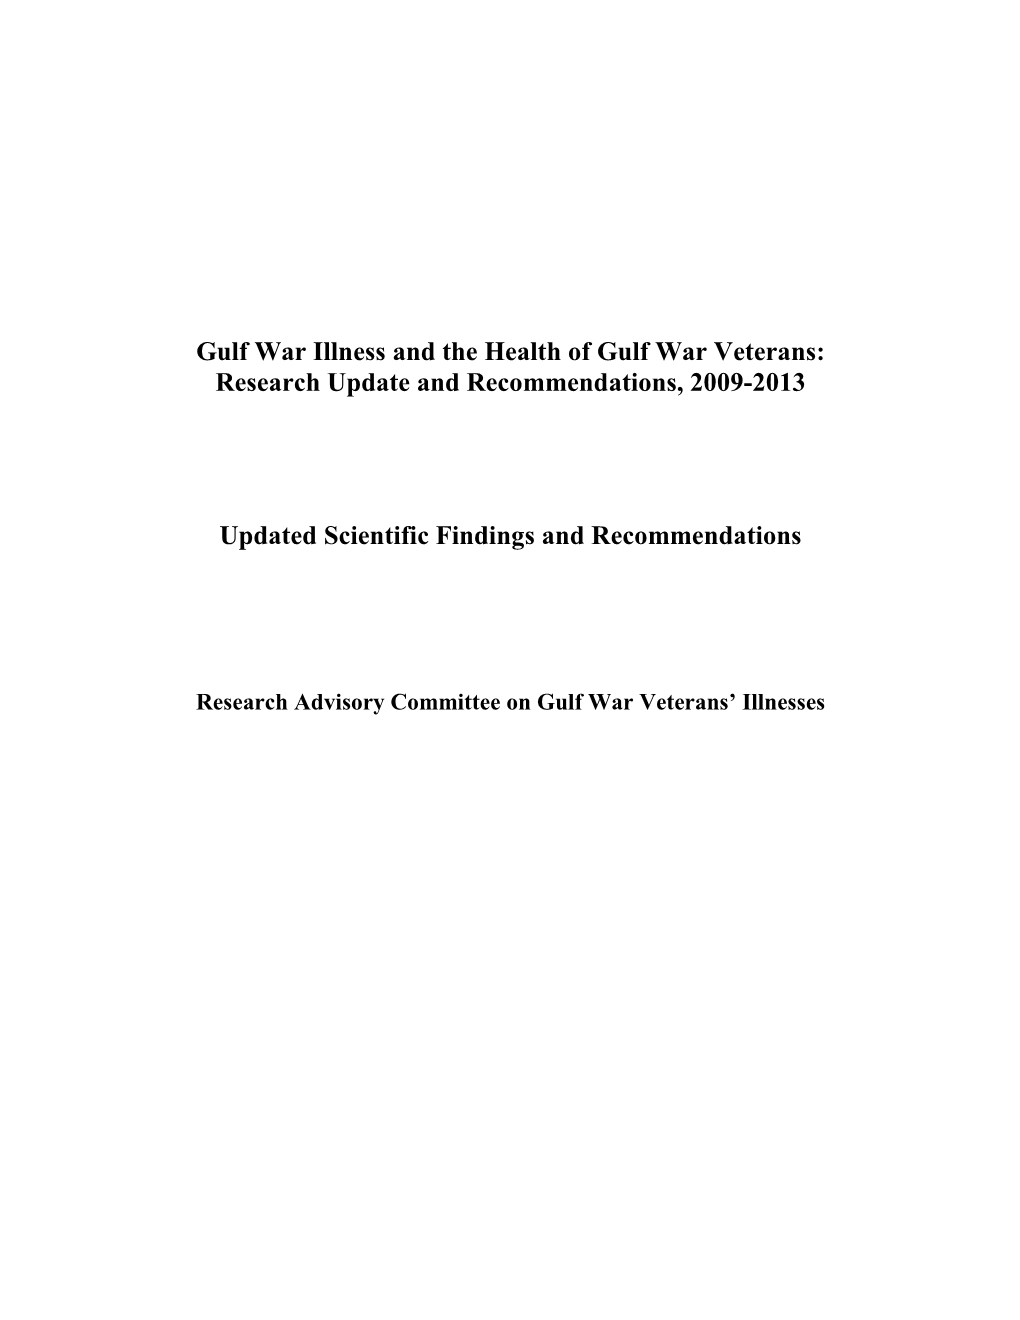 Research Advisory Committee on Gulf War Veterans' Illnesses, 2012)